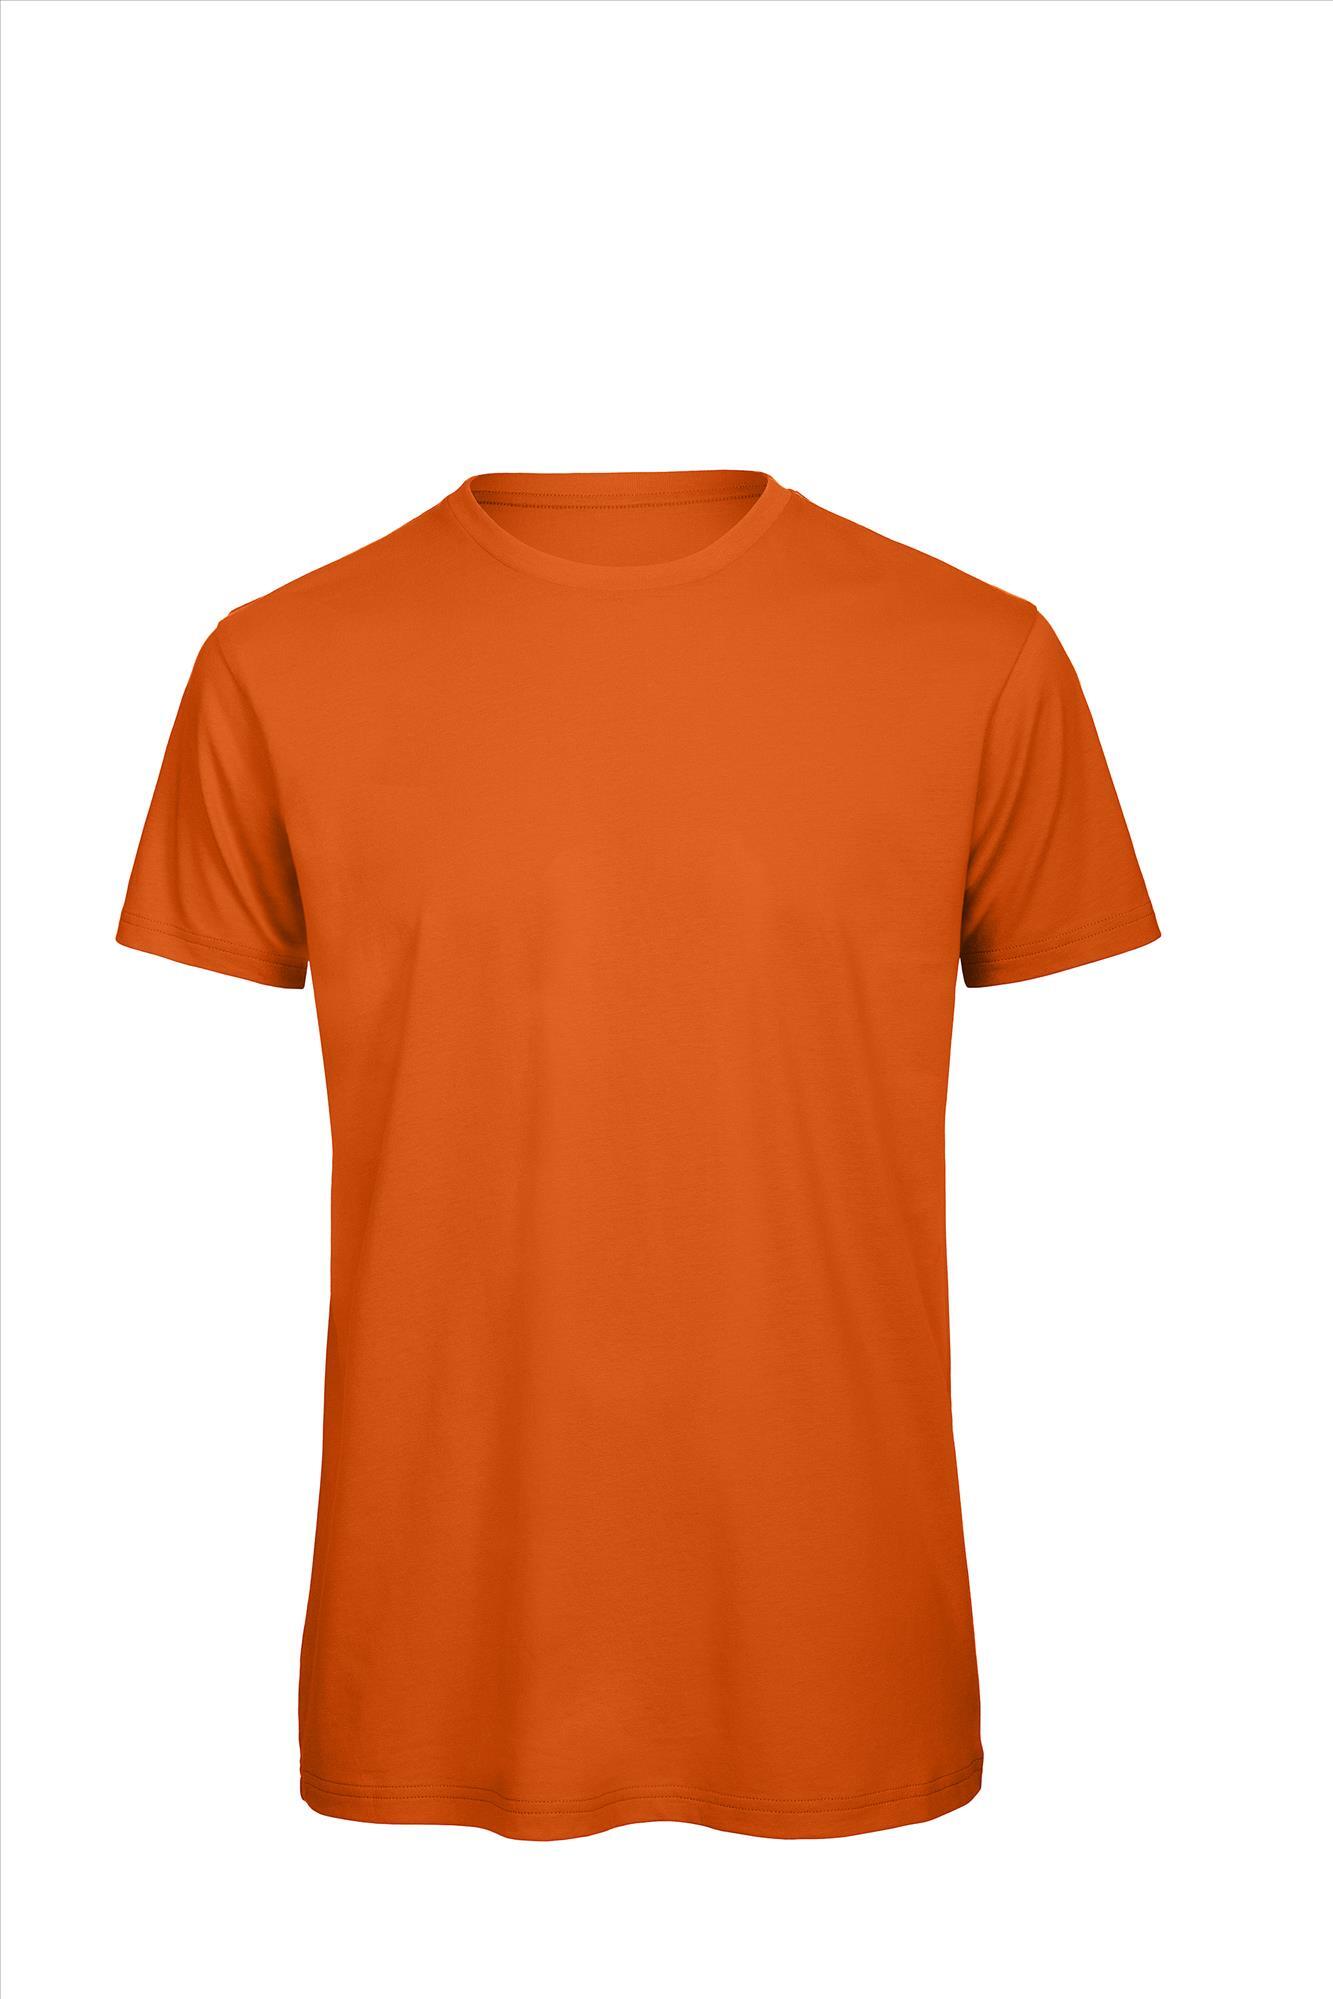 Heren T-shirt urban oranje te personaliseren bedrukbaar duurzaam shirt